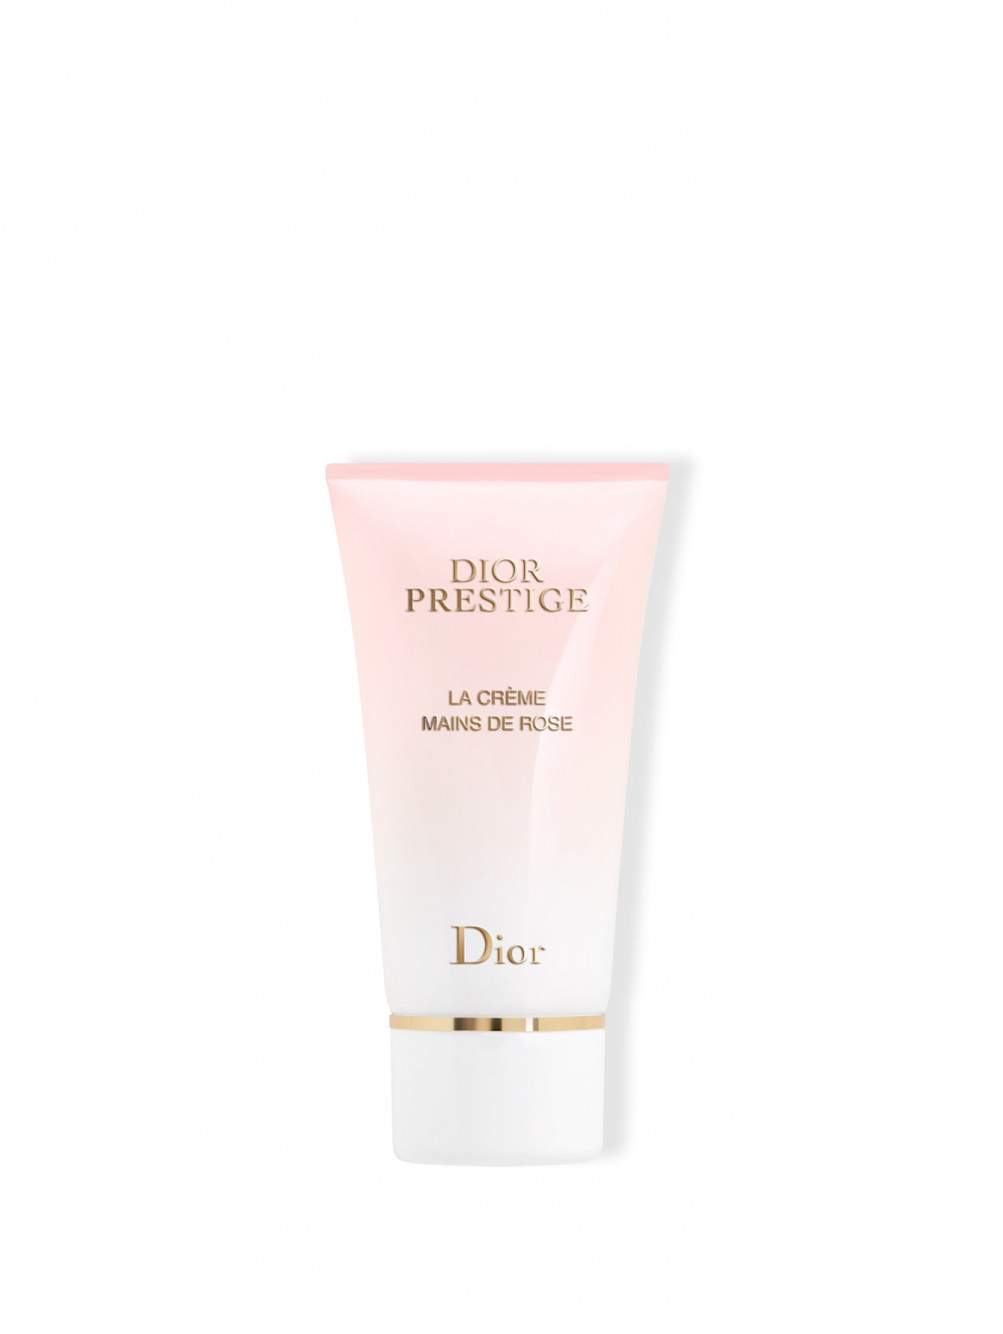 Dior Prestige La Crème Mains de Rose Крем для рук 50 мл - Общий вид